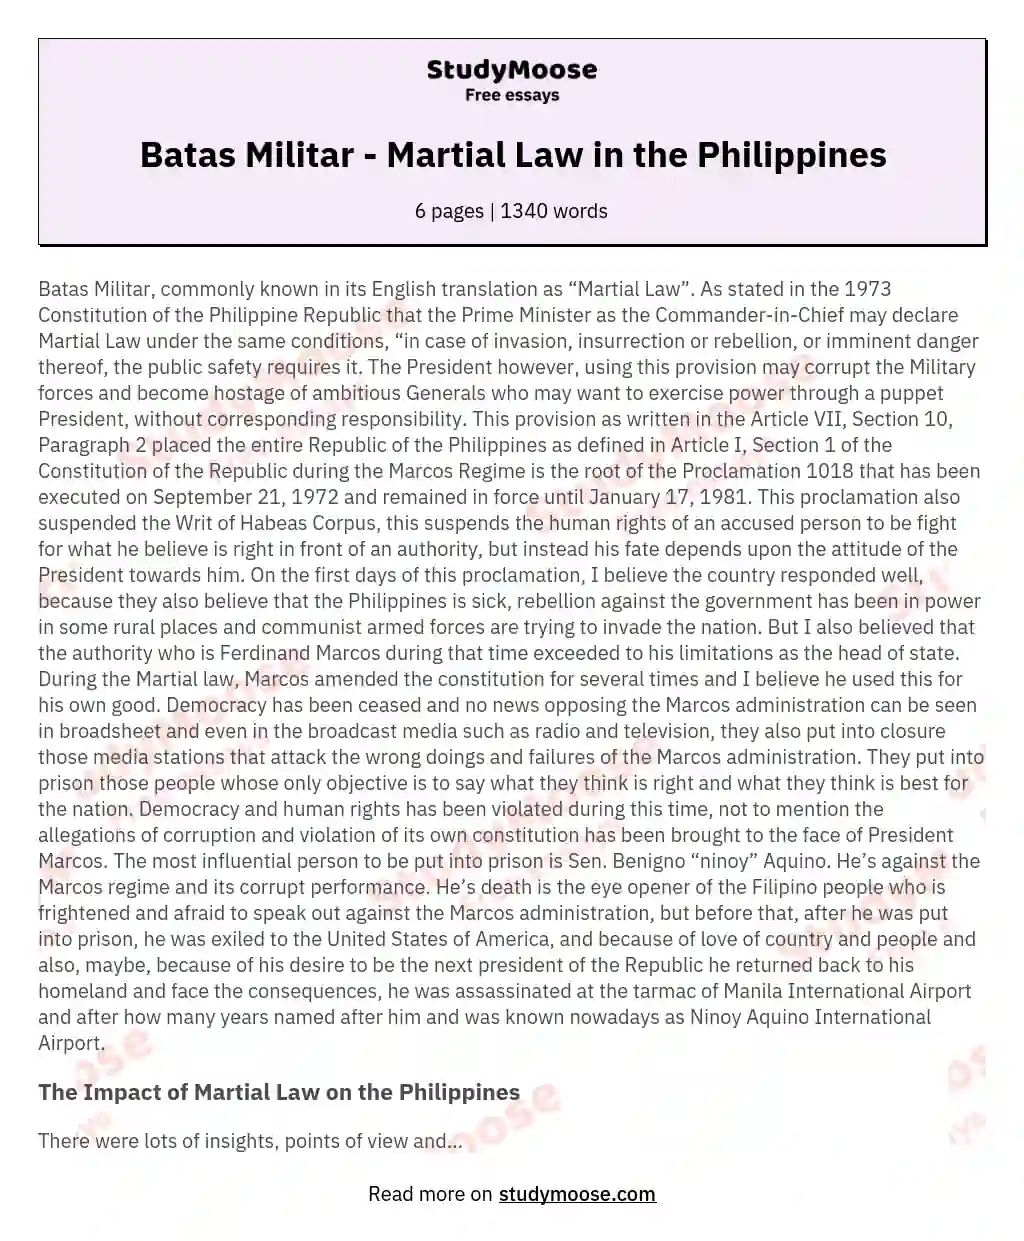 Batas Militar - Martial Law in the Philippines